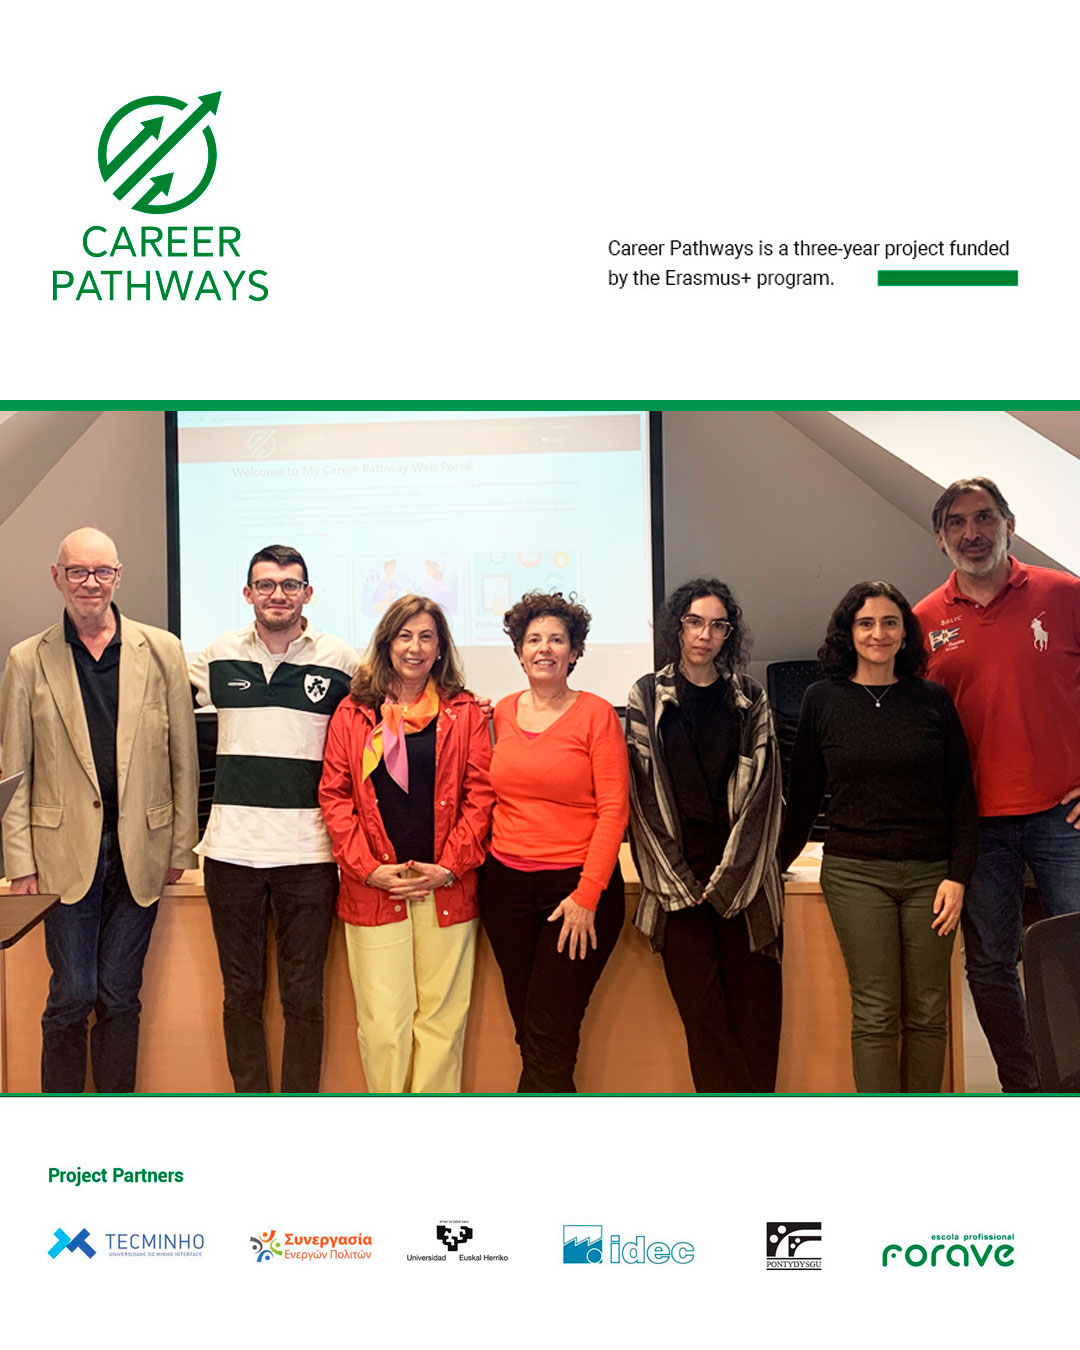 Career-pathways-project-meeting-Bilbao-01